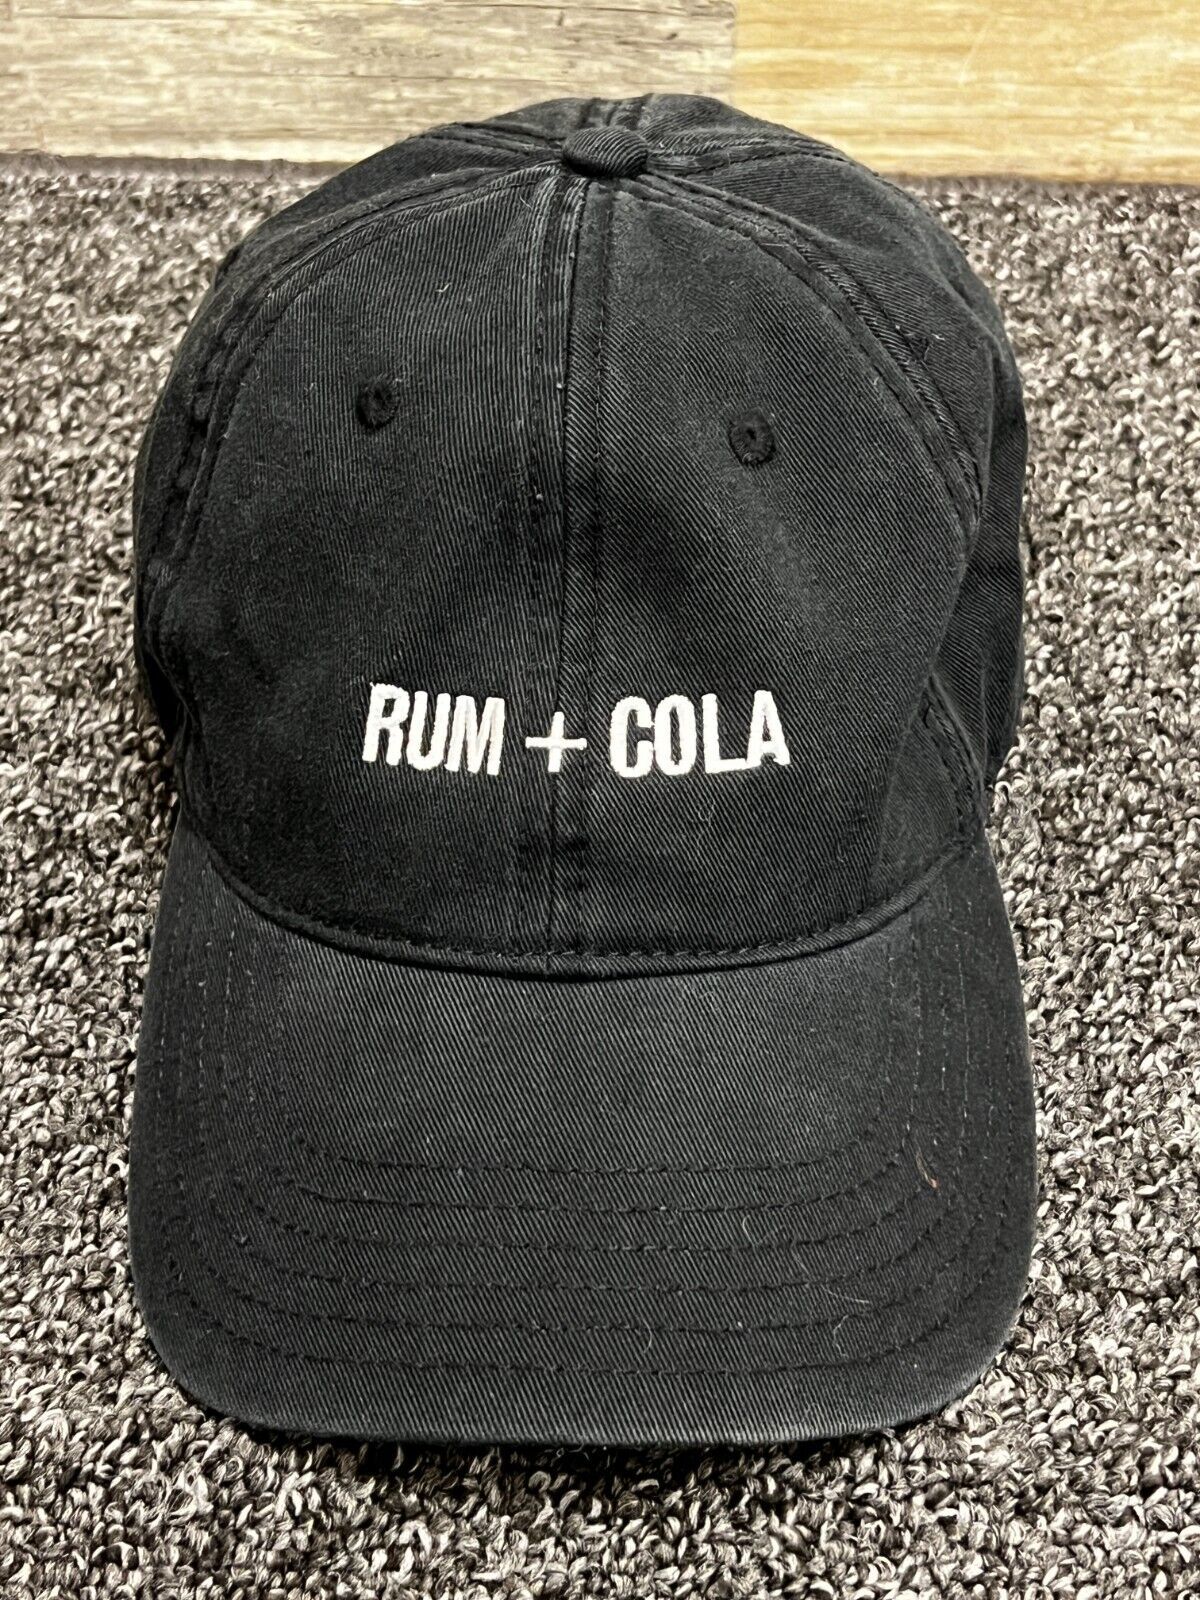 Primary image for RUM + COLA Bacardi Rum Black Denim Promo Strap Back Adjustable Hat Cap ~ OSFA